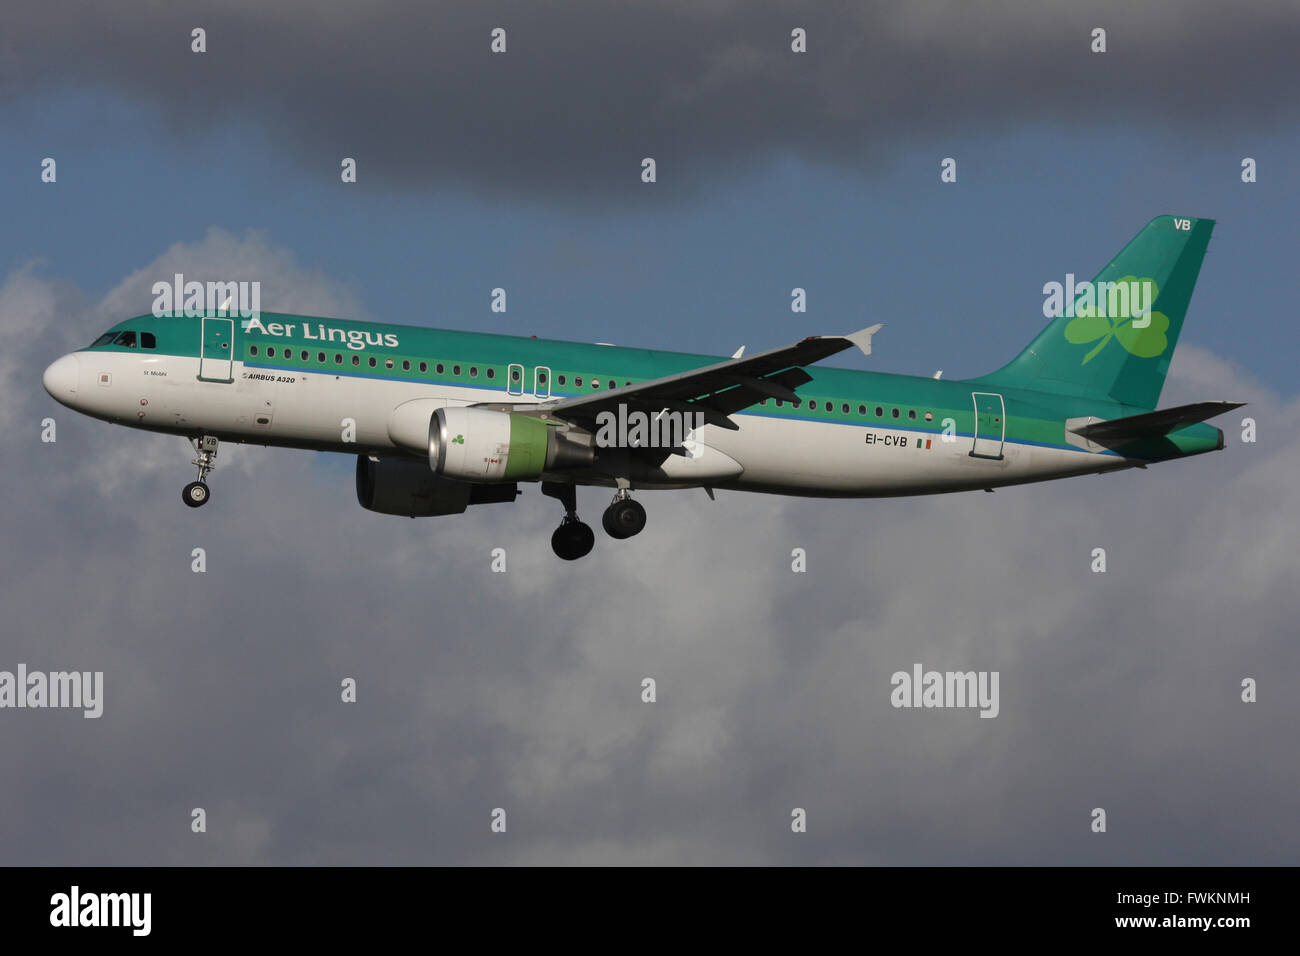 AER LINGUS A320 Stock Photo